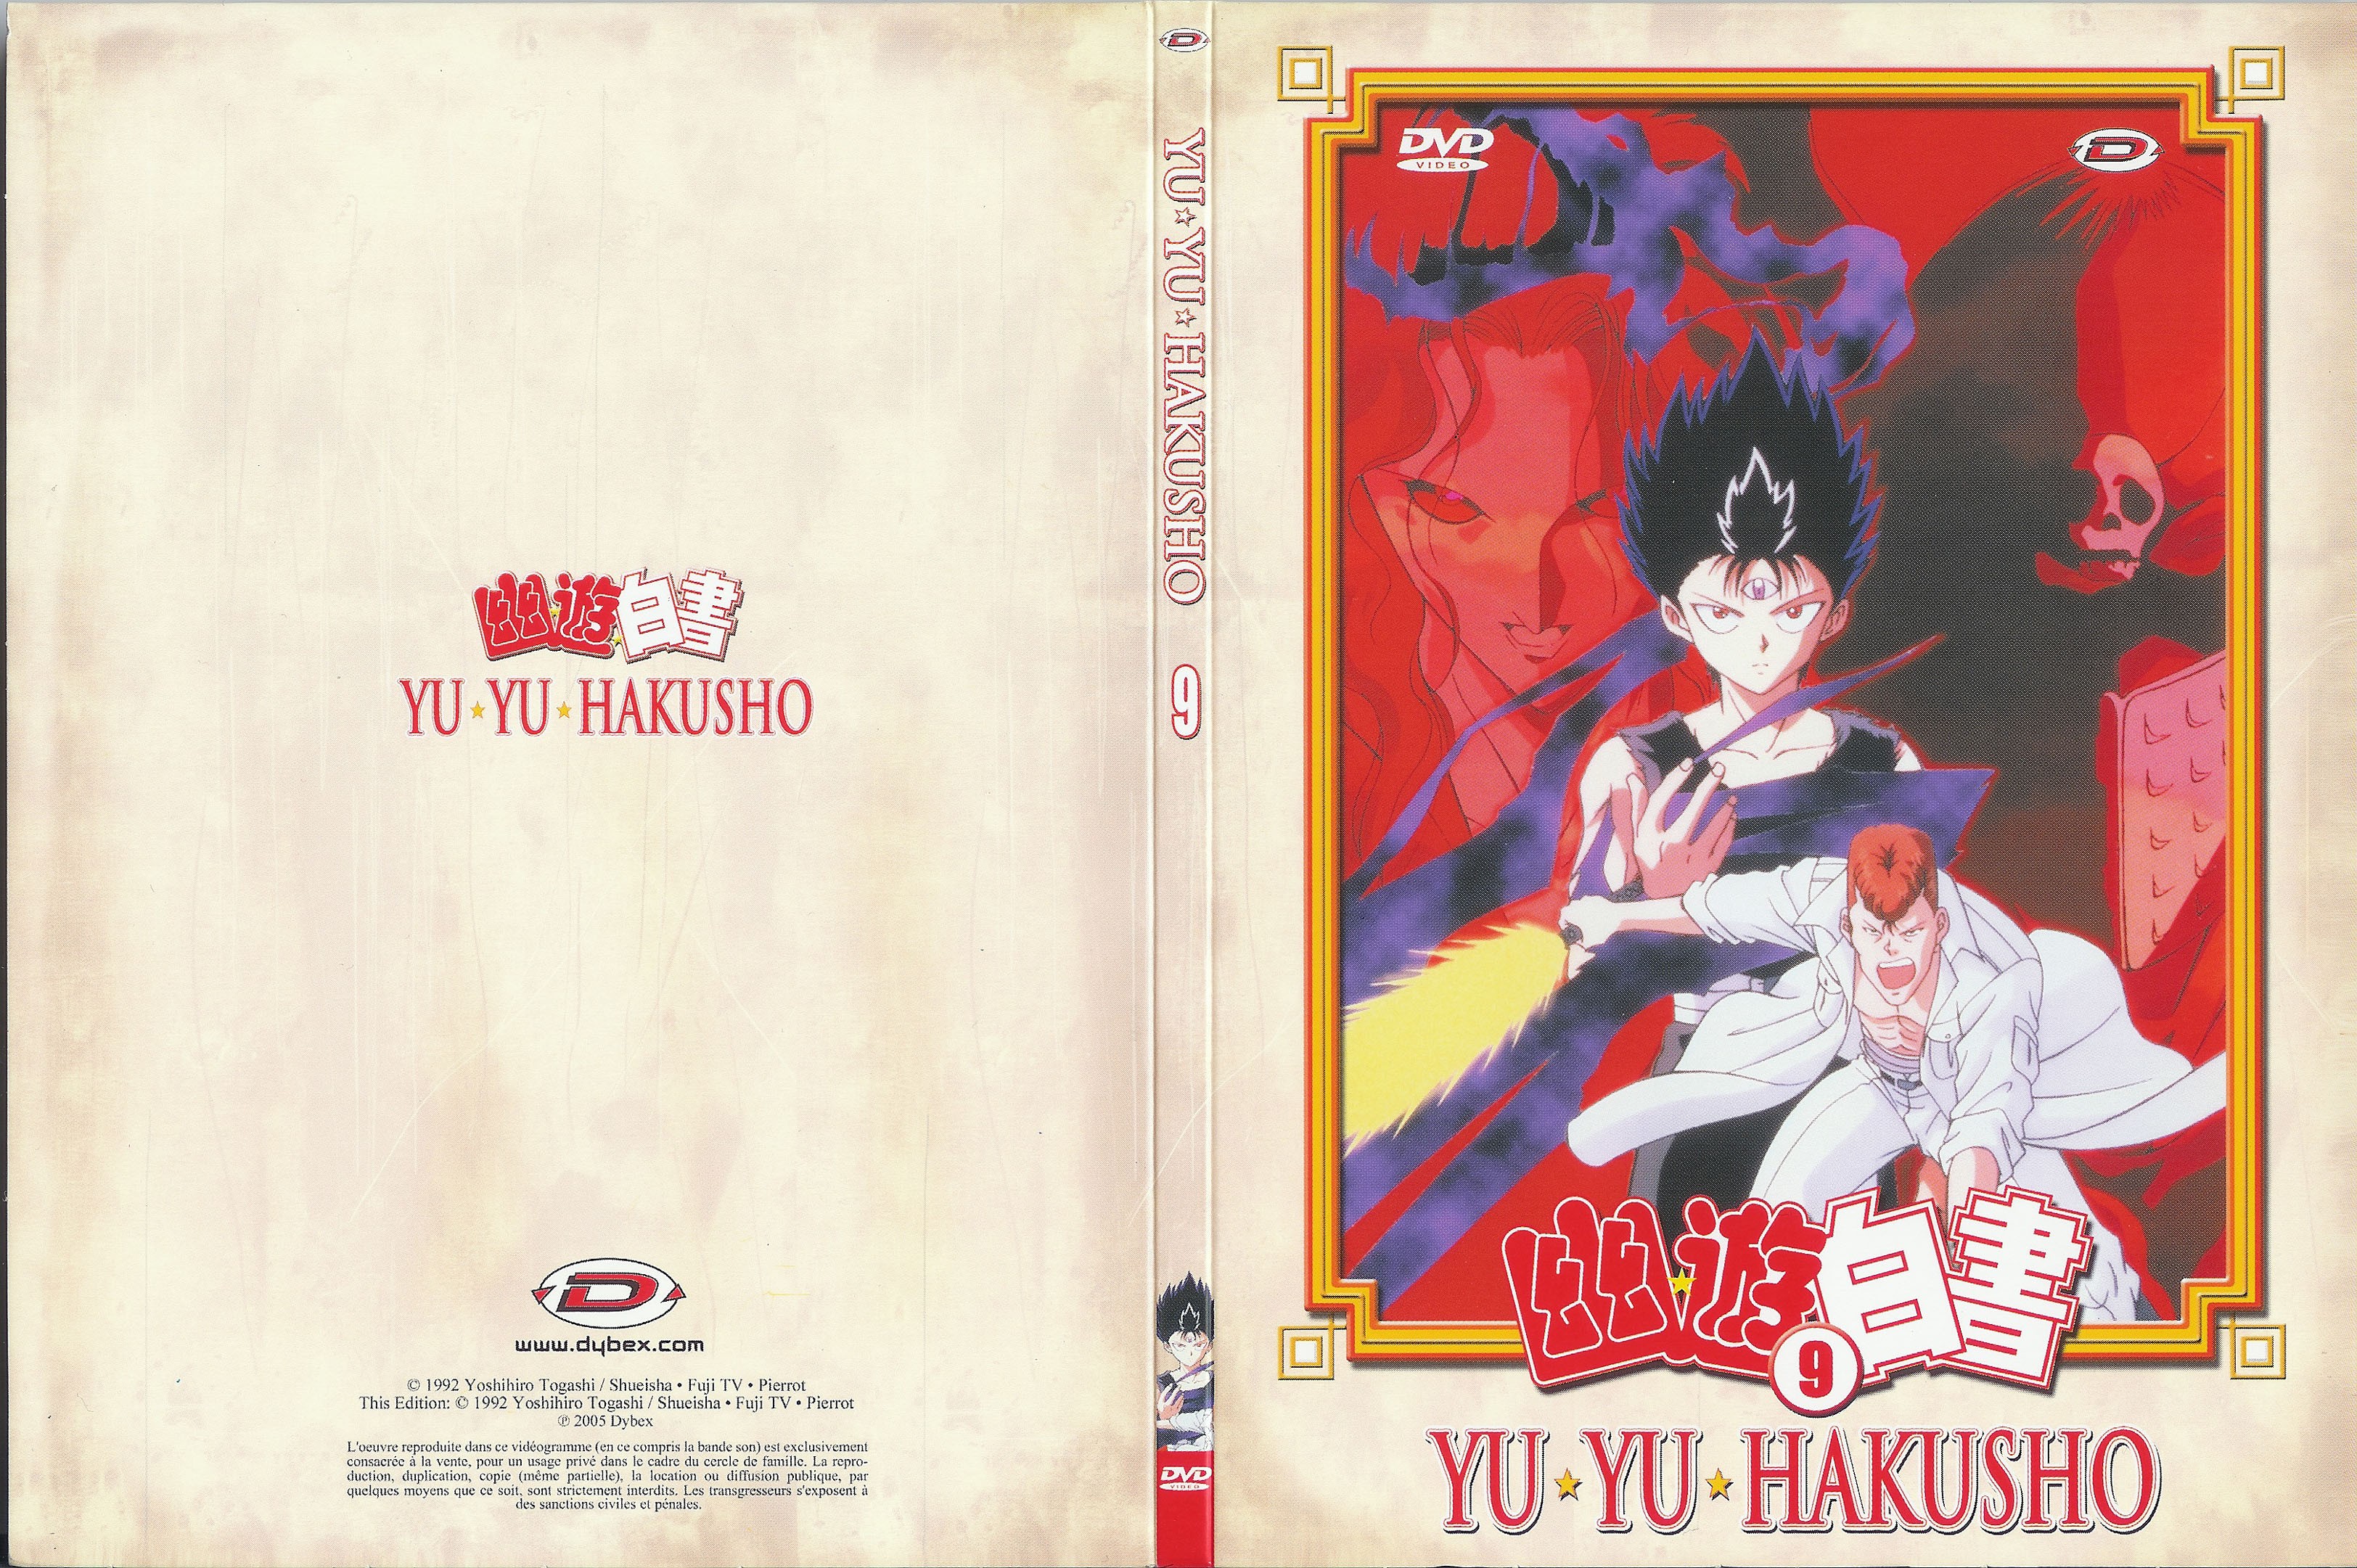 Jaquette DVD Yu yu hakusho vol 09